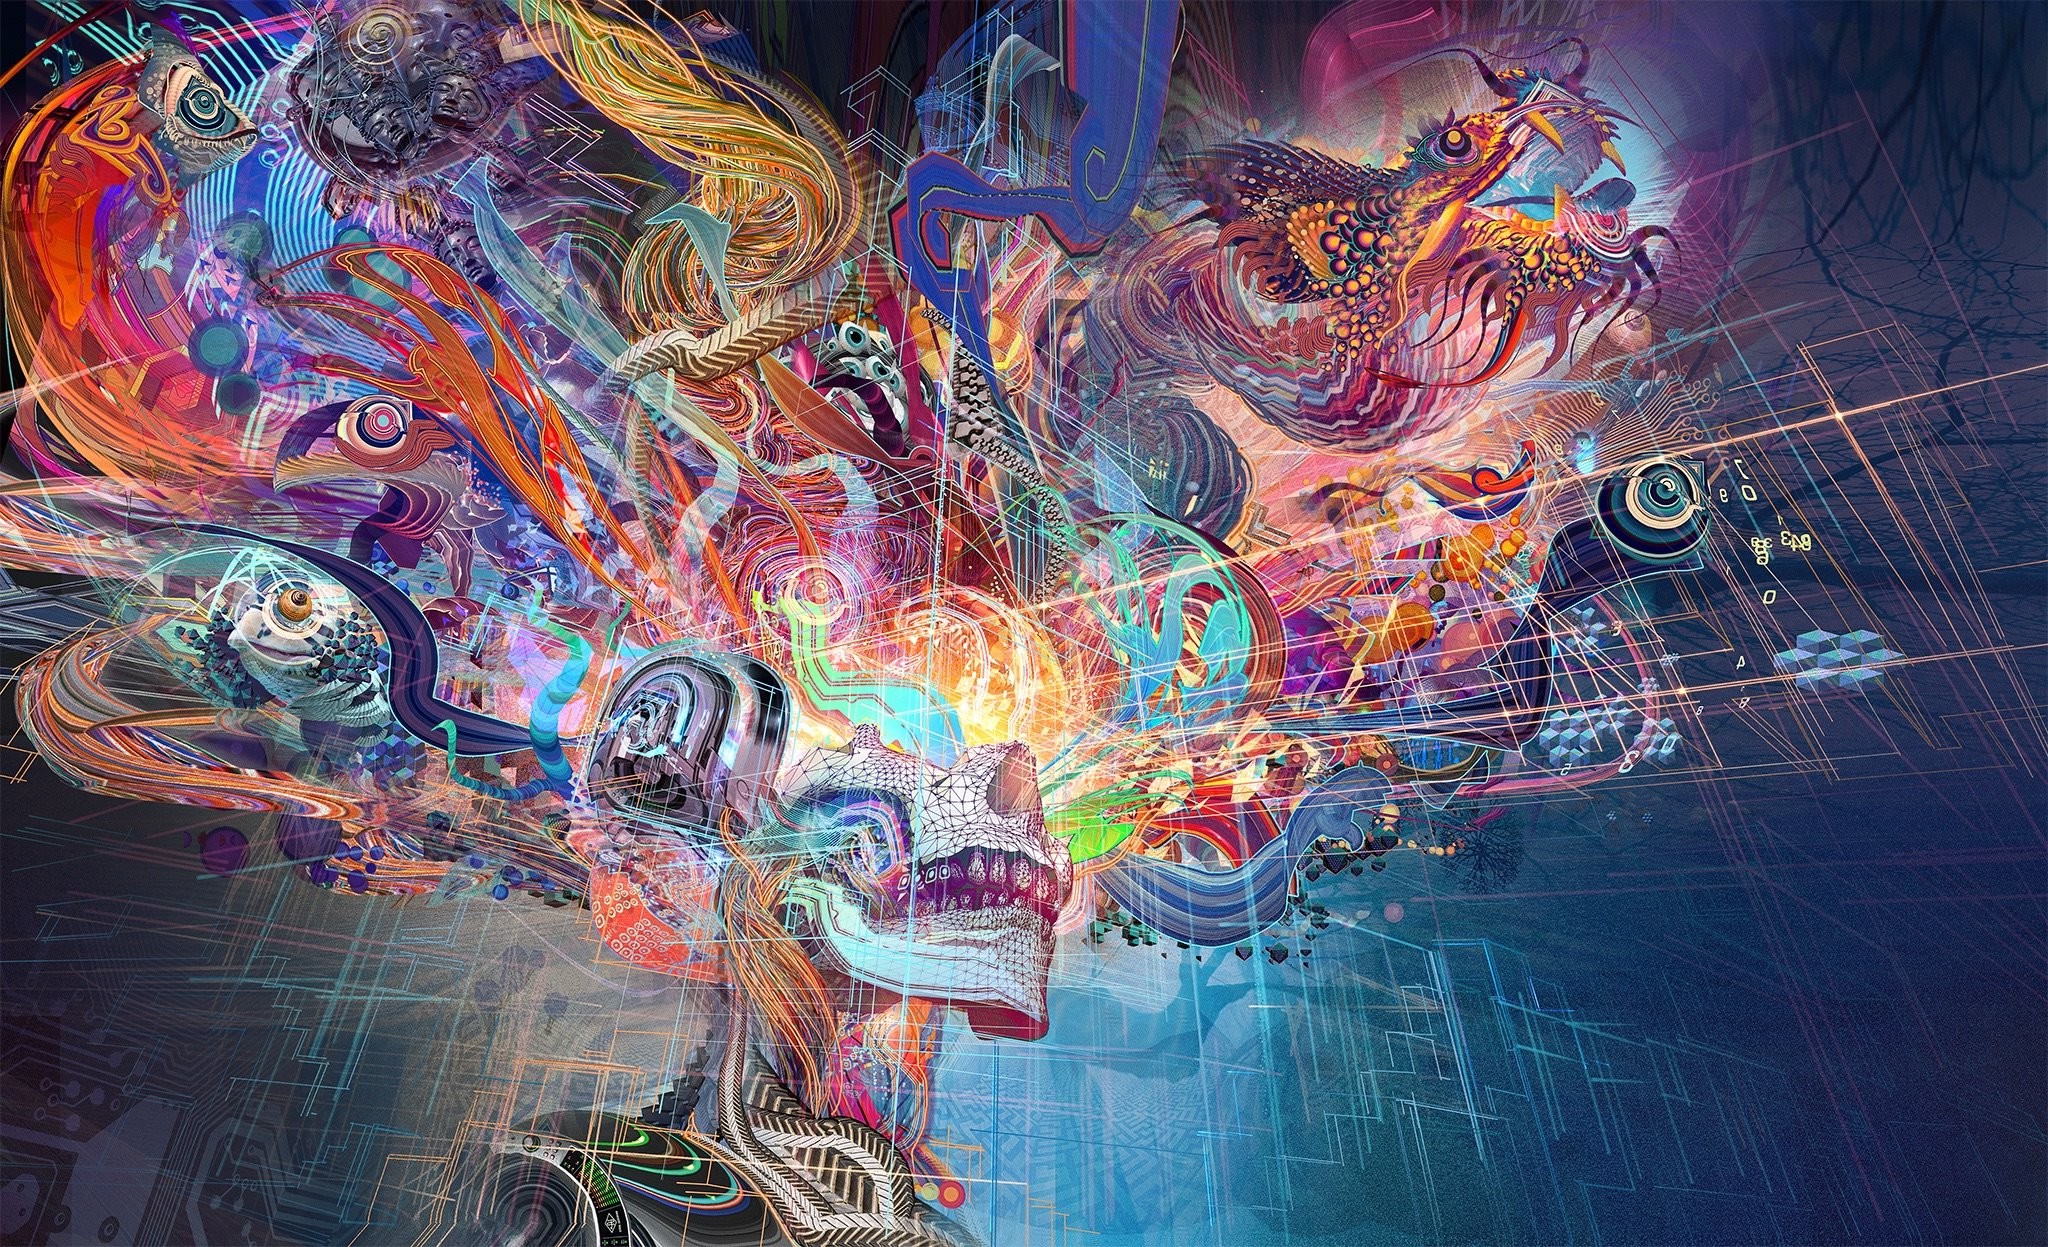 Wallpaper, painting, abstract, space, artwork, graphic design, world, ART, graphics, computer wallpaper, modern art, fractal art, psychedelic art, Brains, 2048x1247 px, visual arts 2048x1247